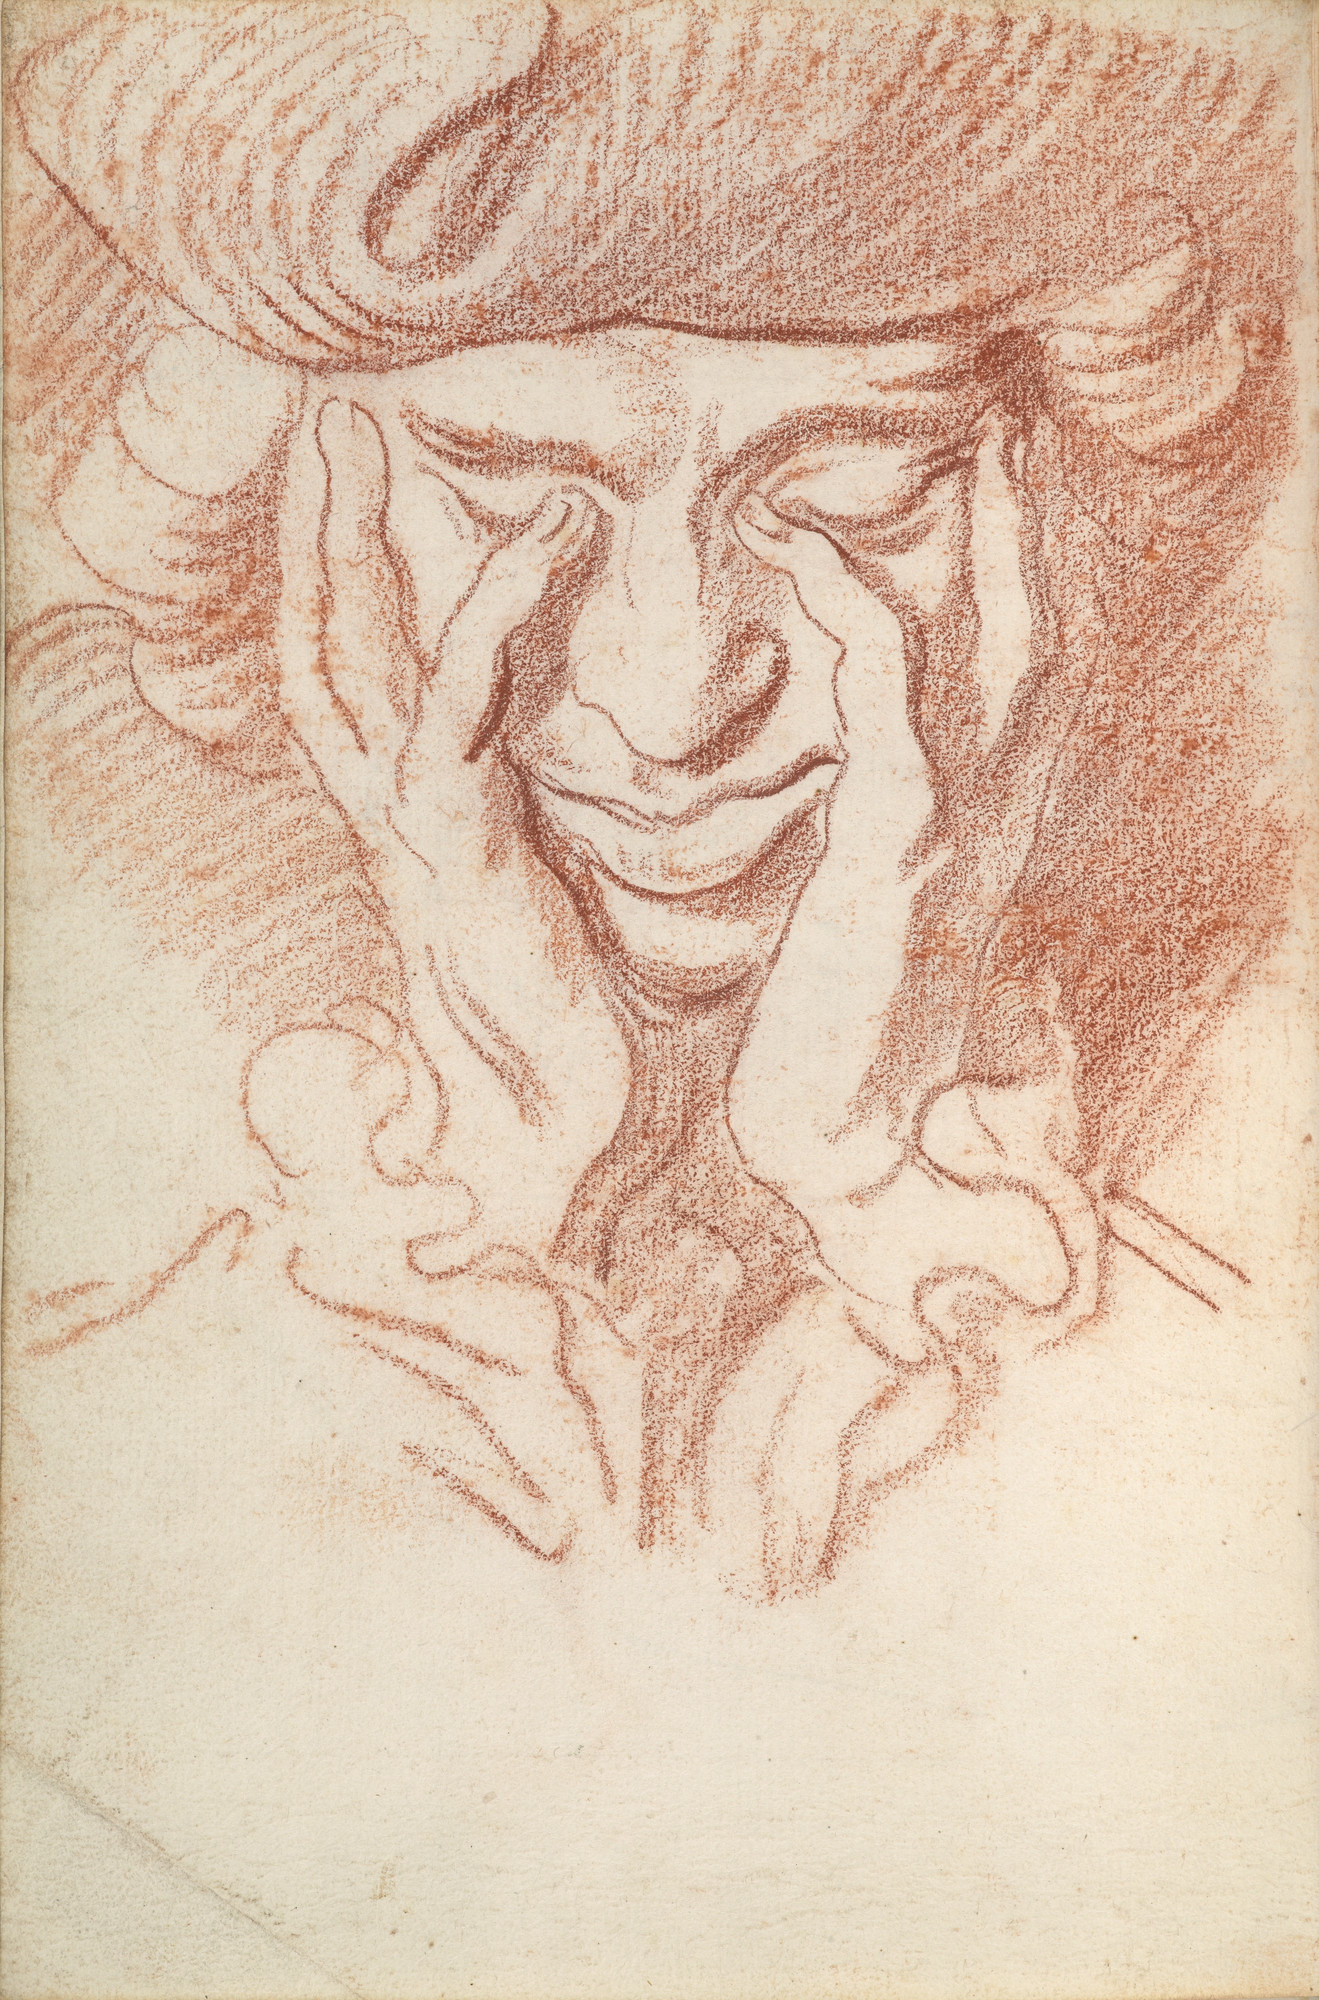 Edme Bouchardon, "Self-Portrait," about 1730, red chalk.